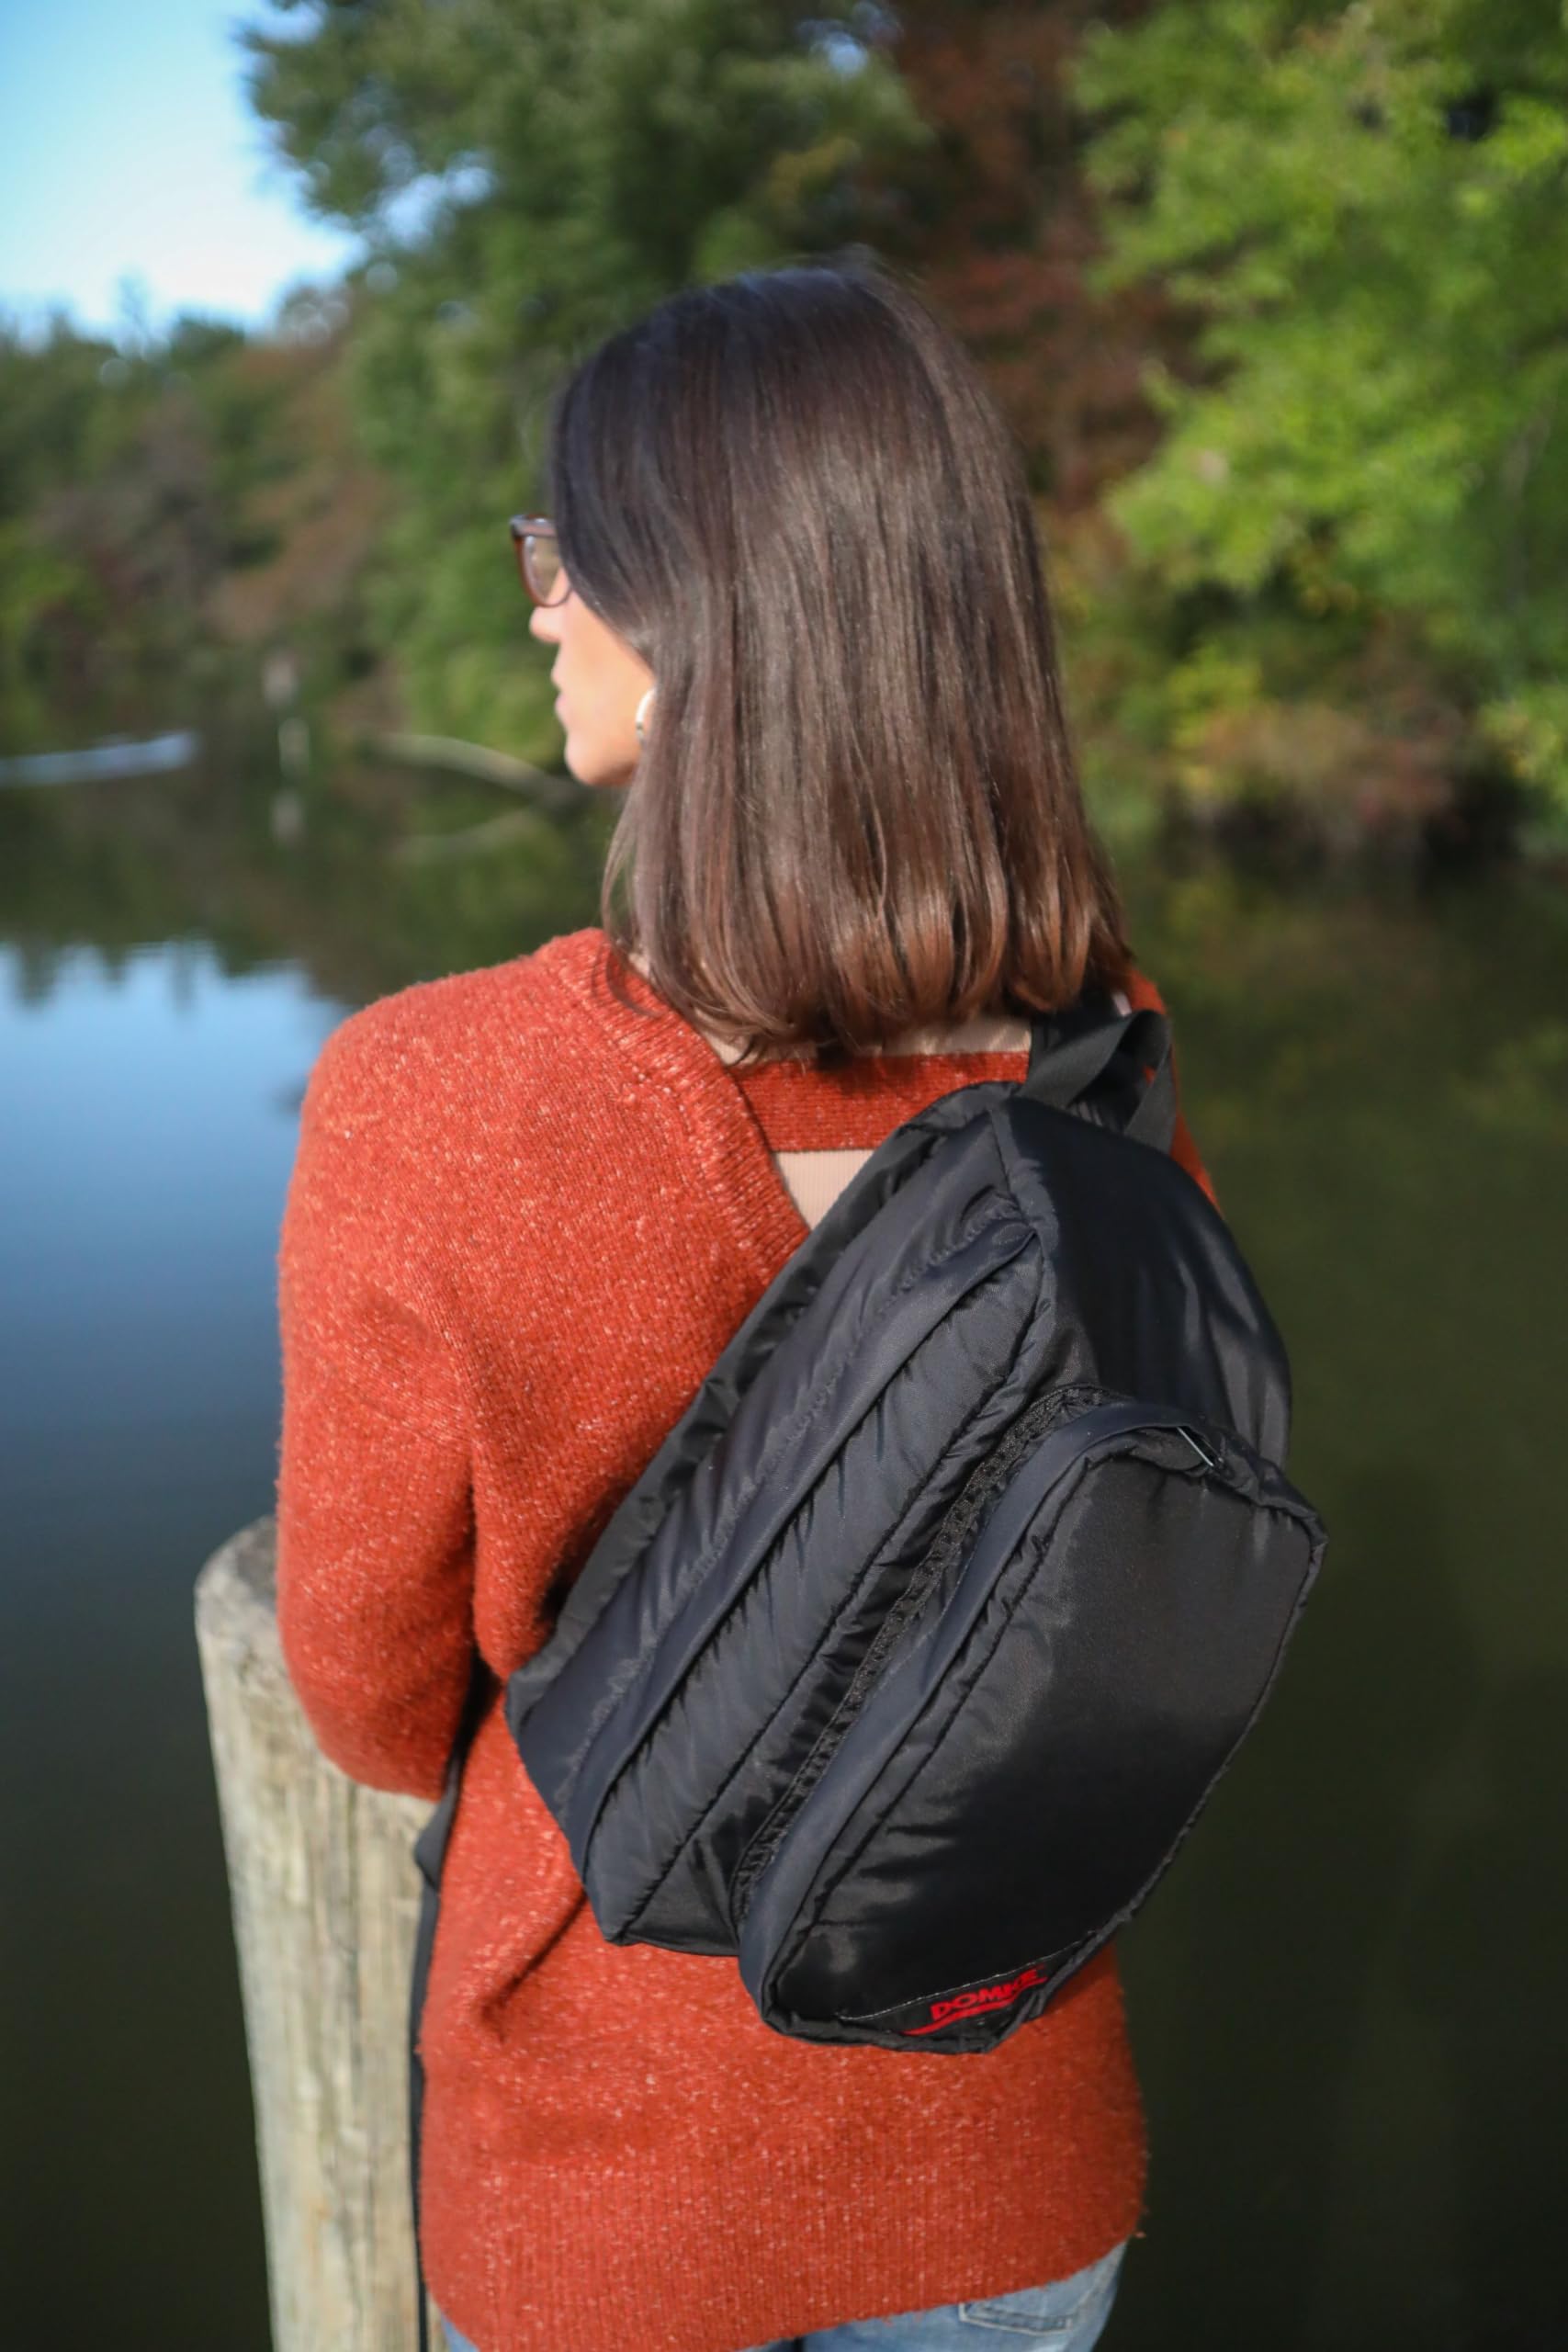 DOMKE Sling Bag, Camera Bag, Tech Accessories, Single Strap Backpack